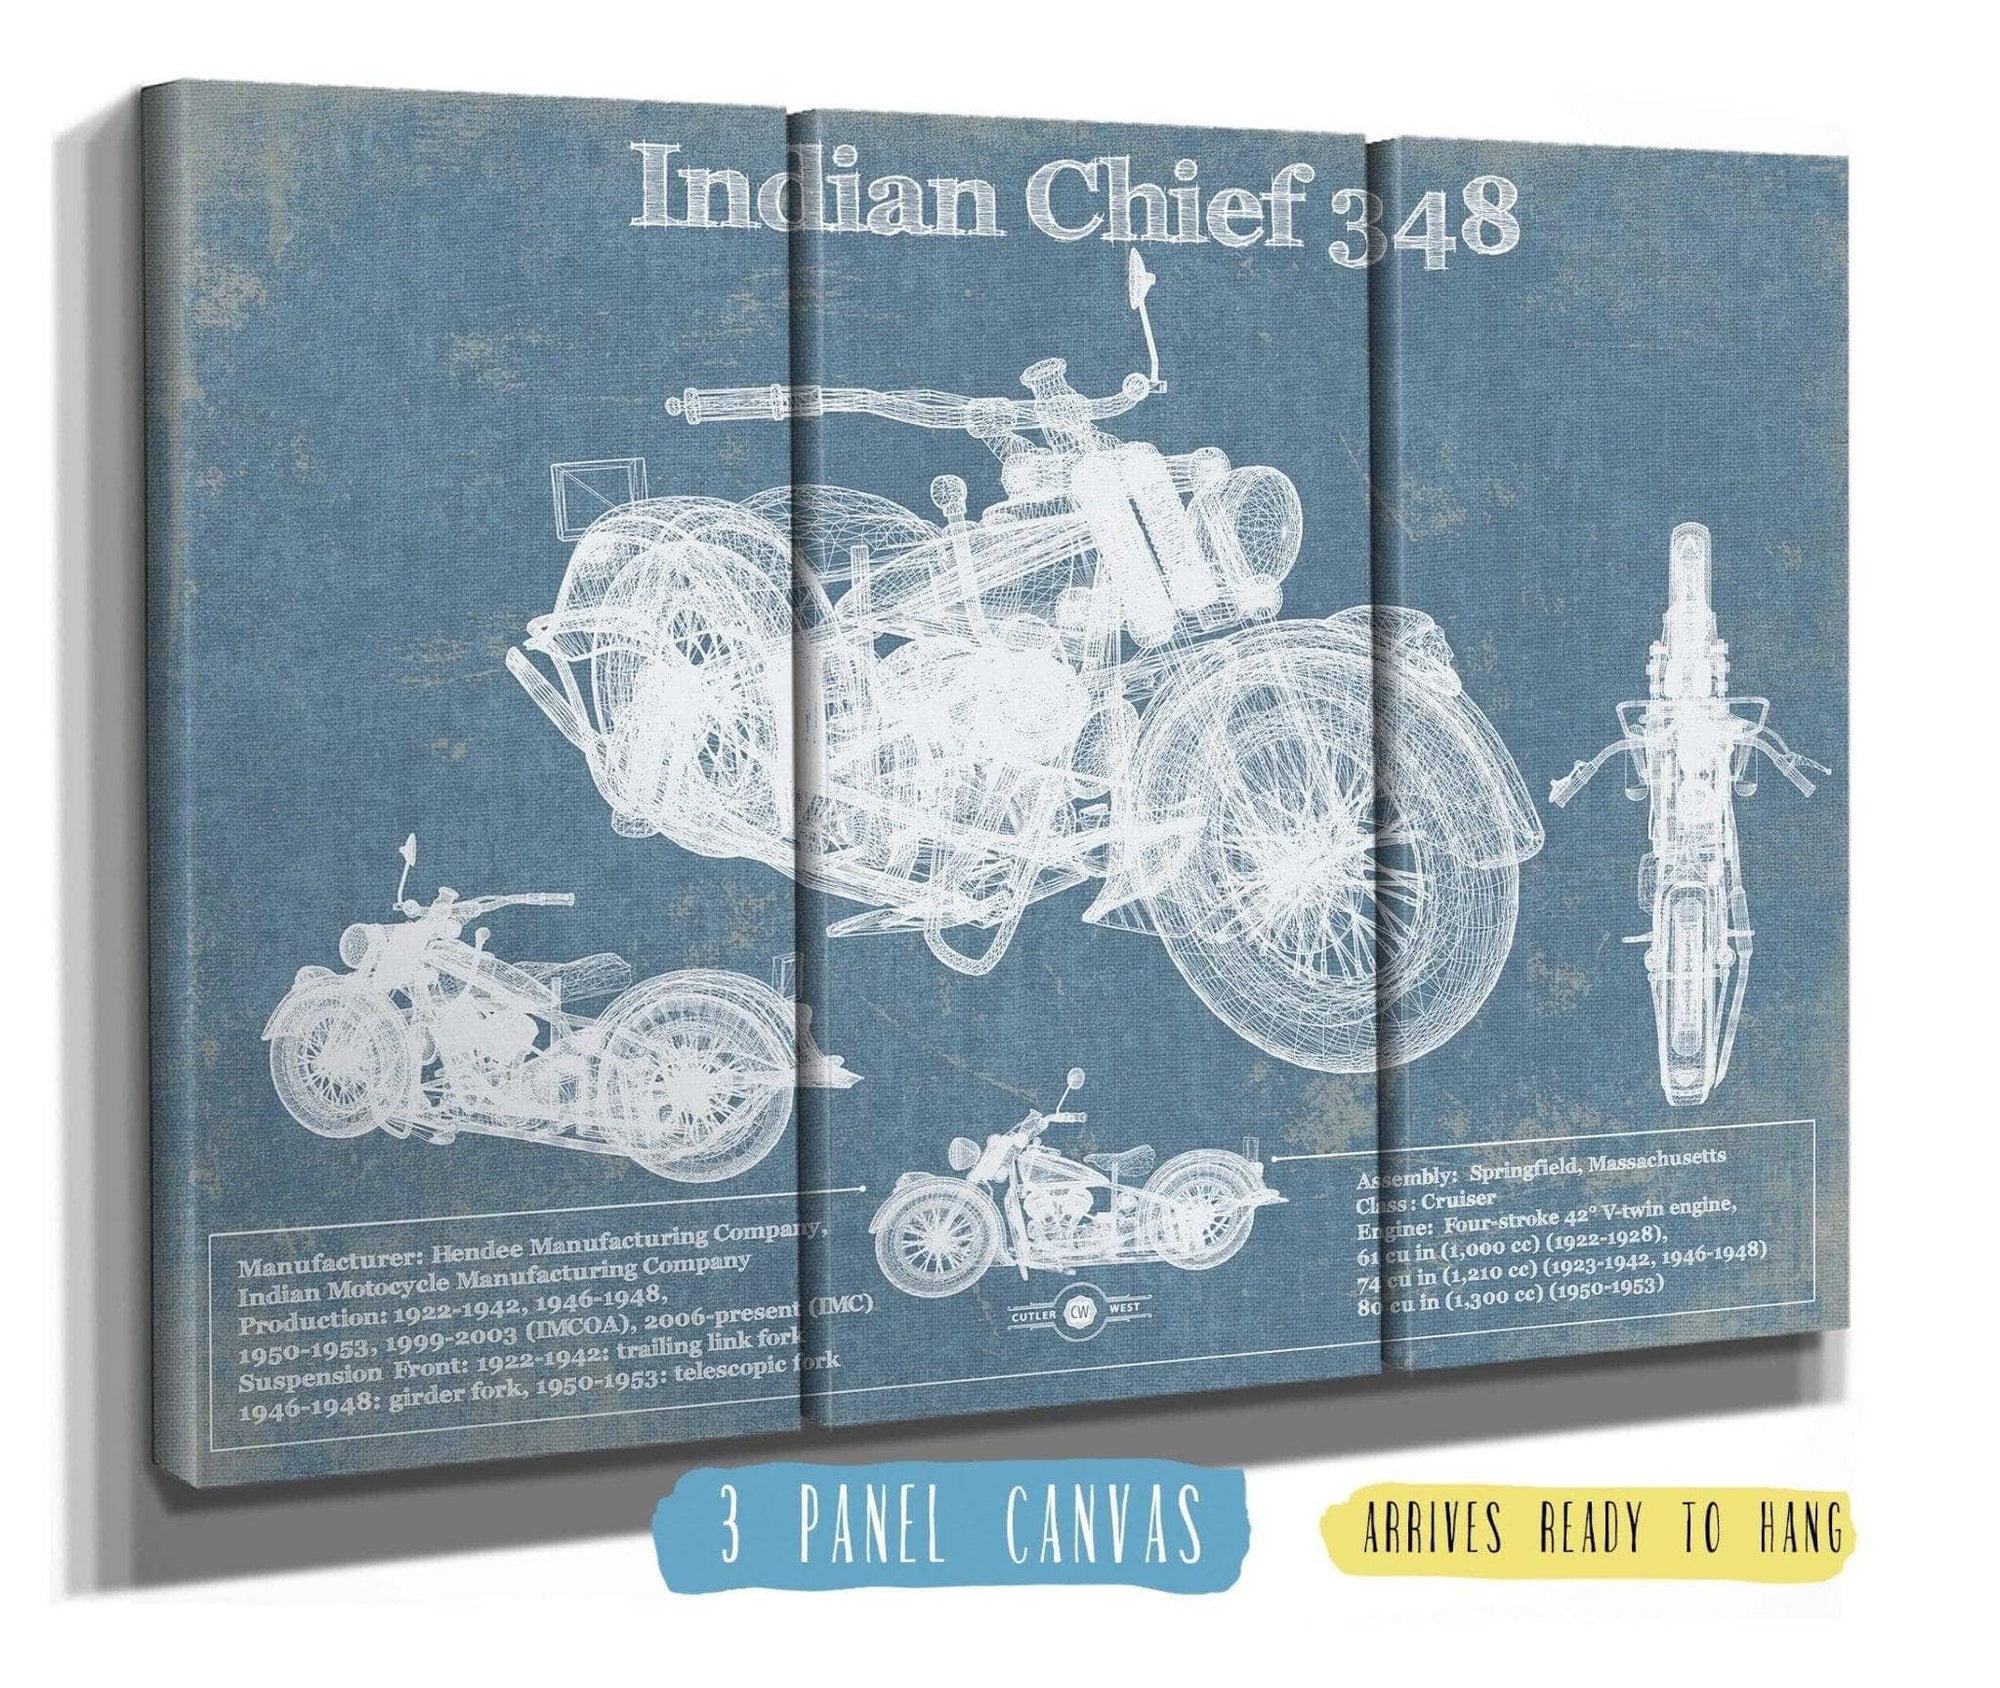 Cutler West 48" x 32" / 3 Panel Canvas Wrap Indian Chief 348 Vintage Original Motorcycle Blueprint 835000022_59413